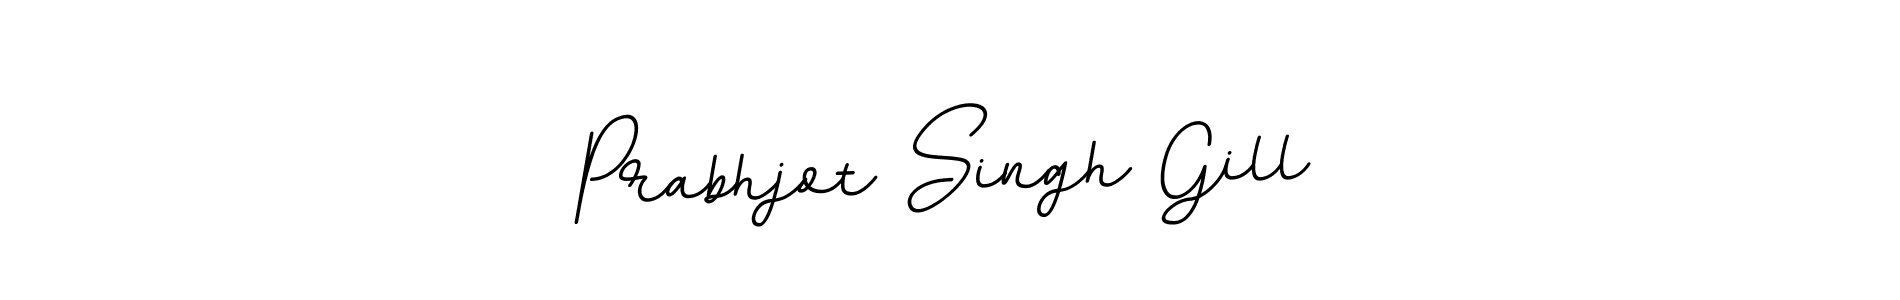 How to Draw Prabhjot Singh Gill signature style? BallpointsItalic-DORy9 is a latest design signature styles for name Prabhjot Singh Gill. Prabhjot Singh Gill signature style 11 images and pictures png